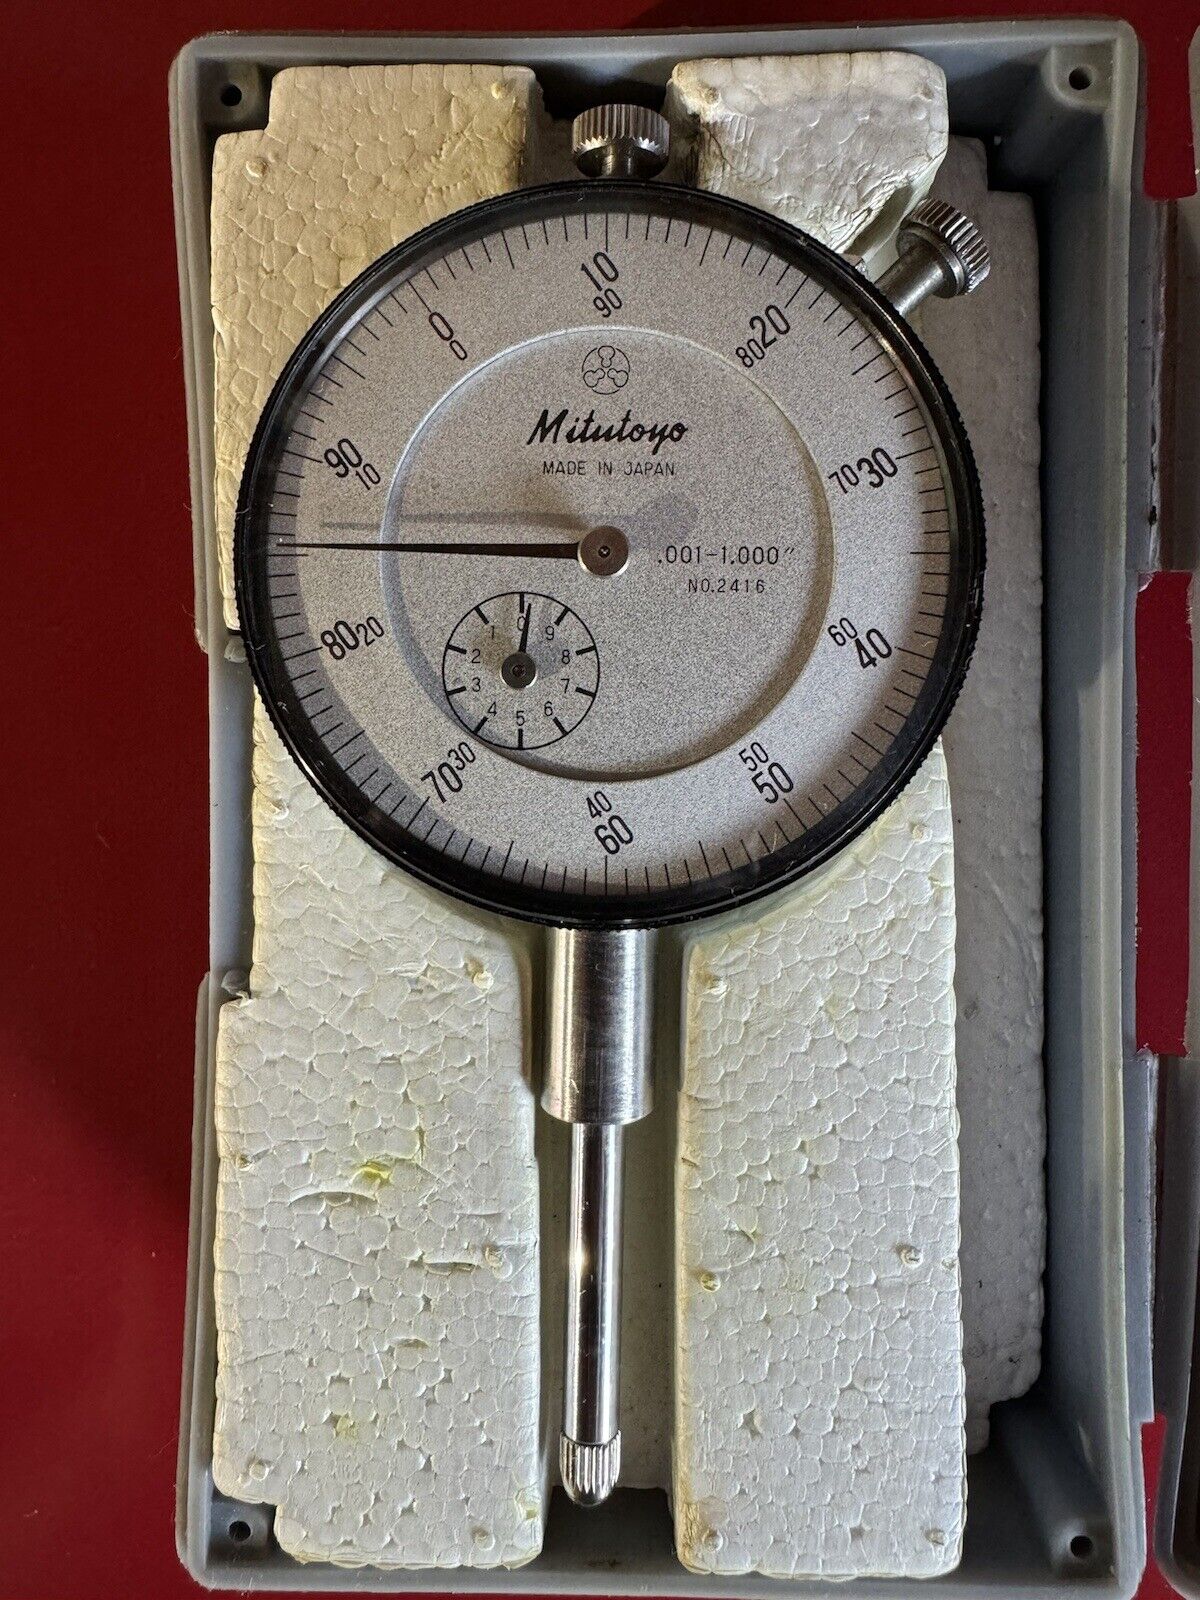 Vintage Mitutoyo dial indicator .001 2416